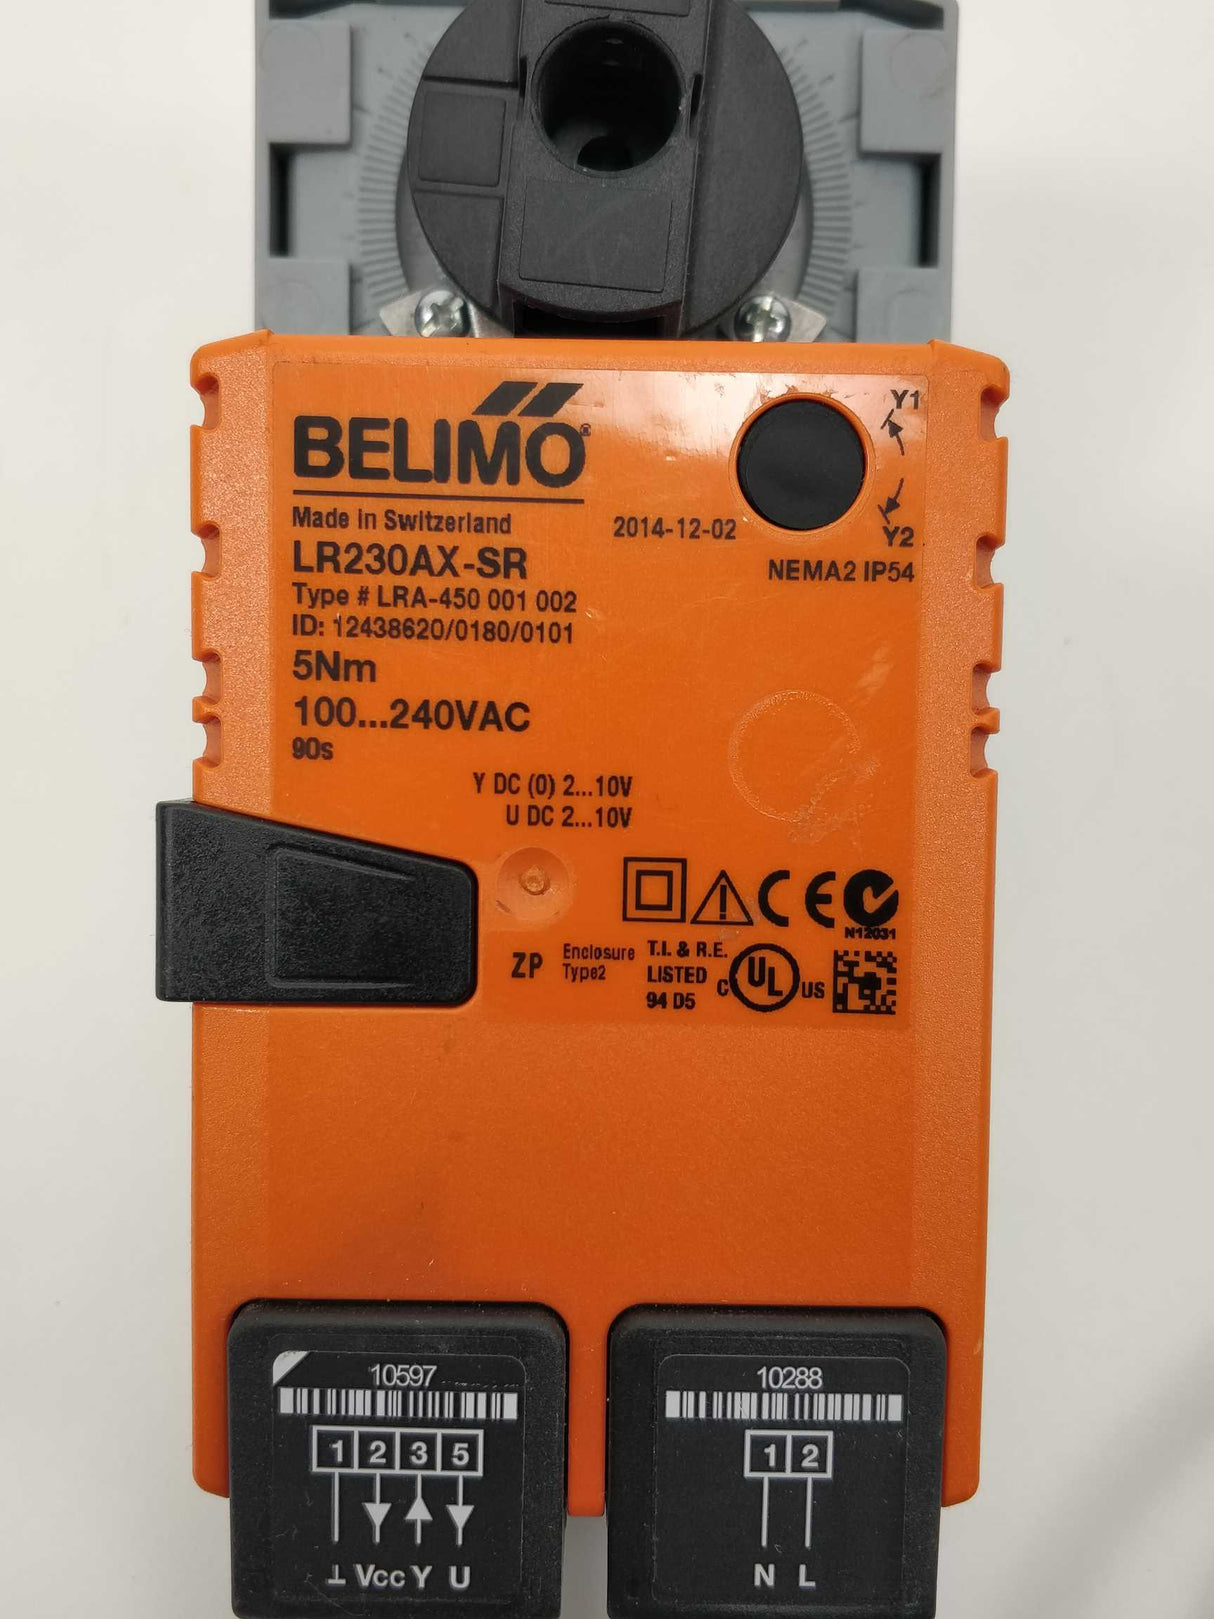 Belimo LR230AX-SR 5 Nm, 230V AC